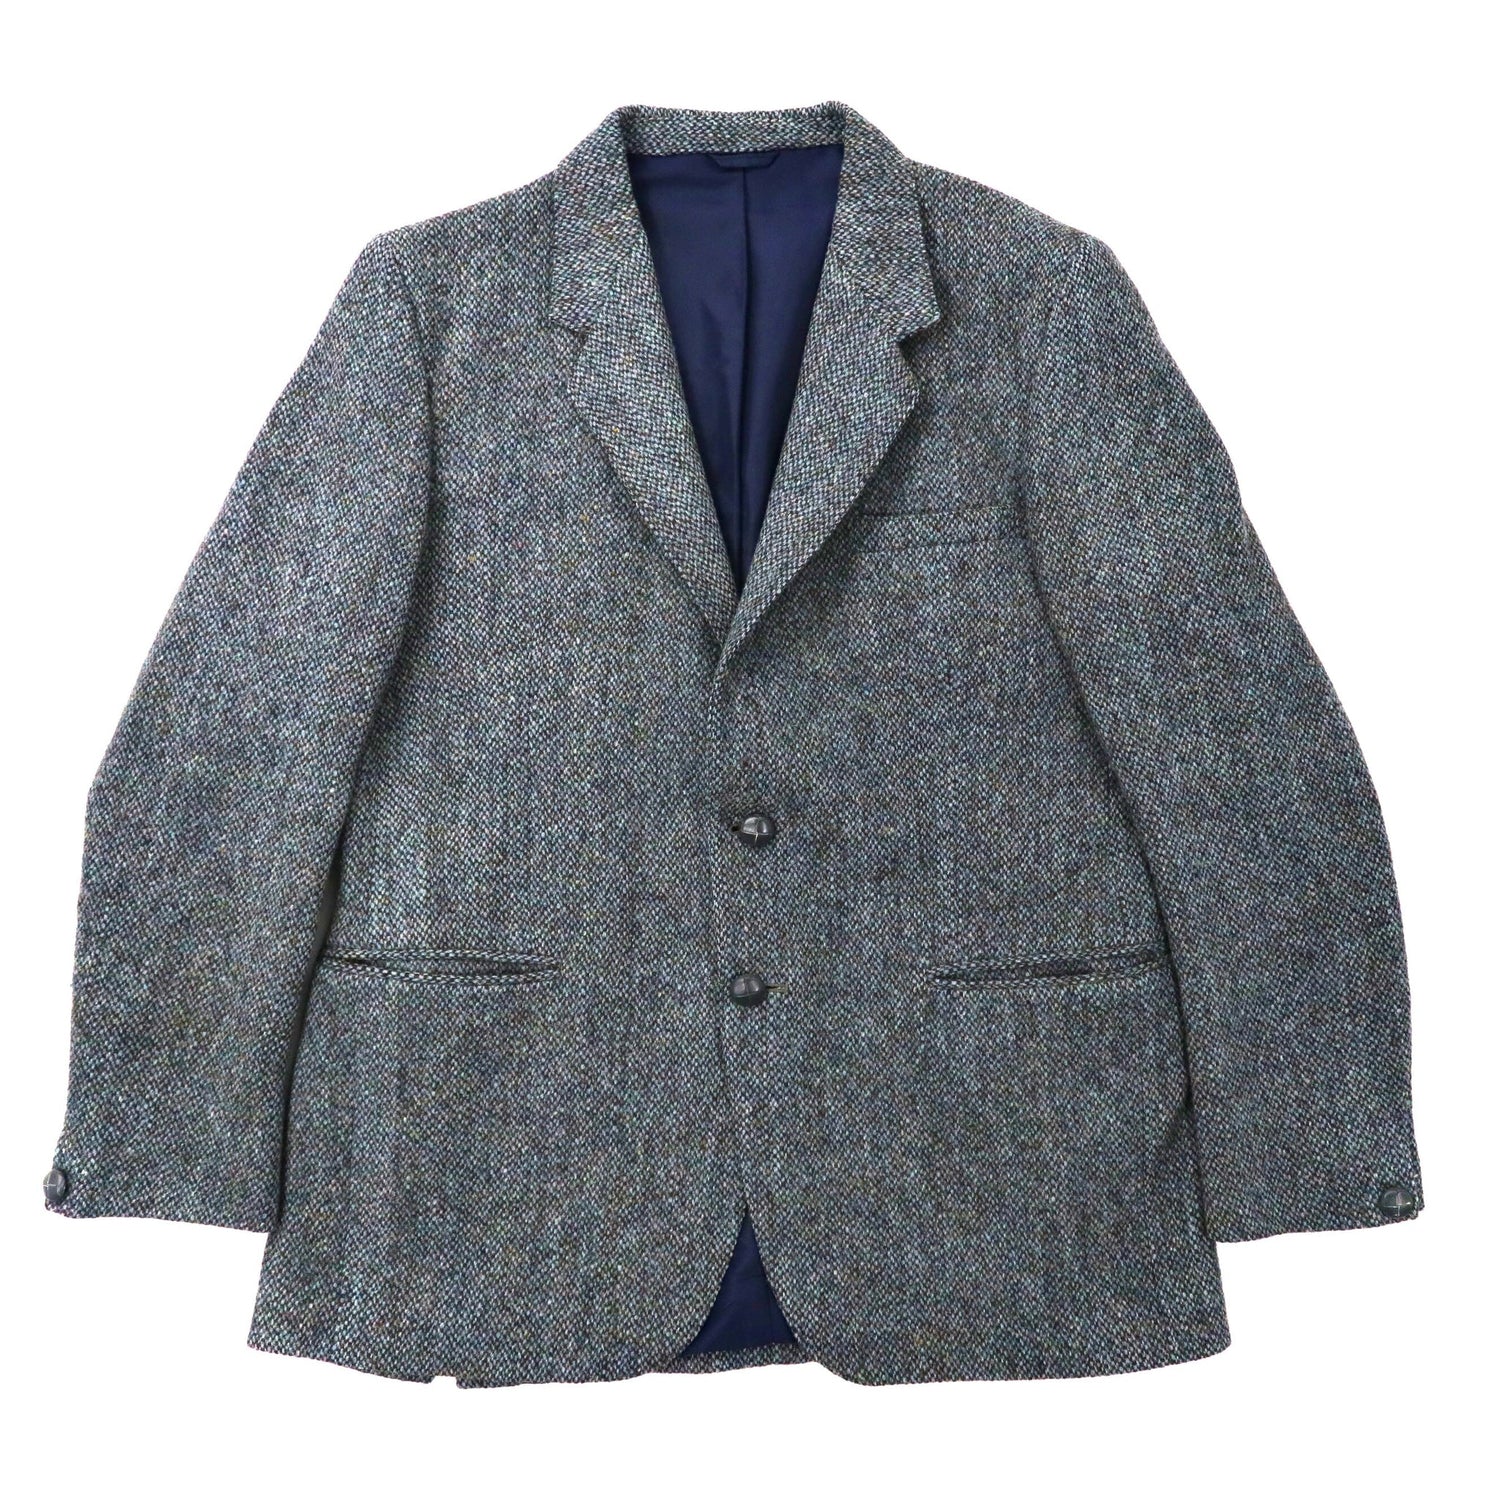 HARRIS TWEED 2B Tweed Jacket L Gray Wool British MADE